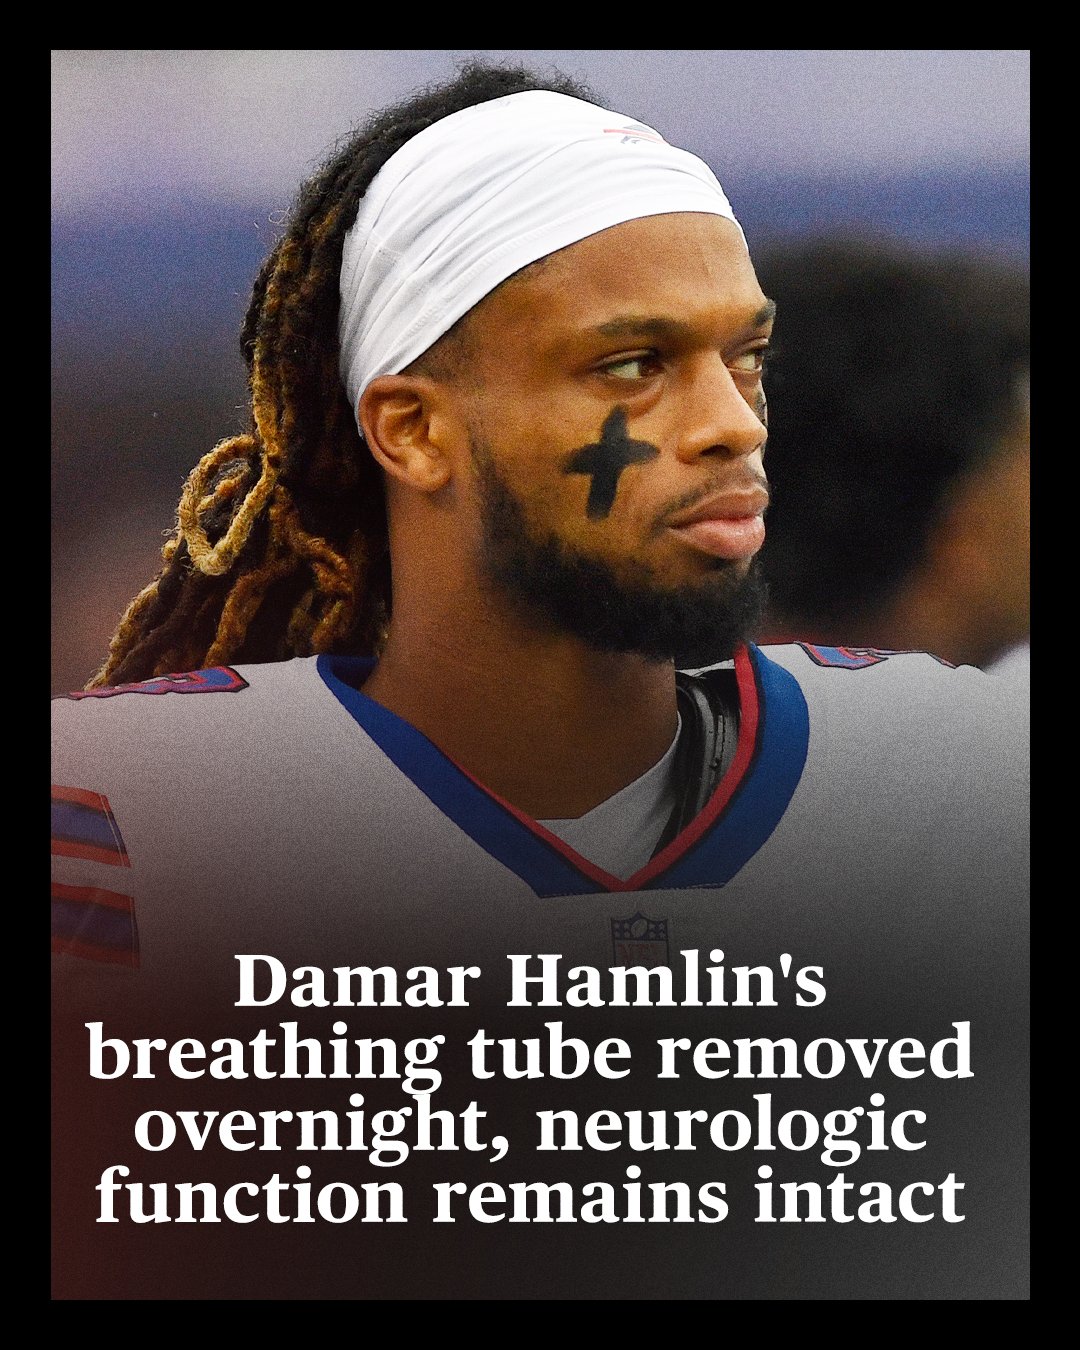 Uncle says Damar Hamlin still 'fighting,' family grateful for support - ESPN